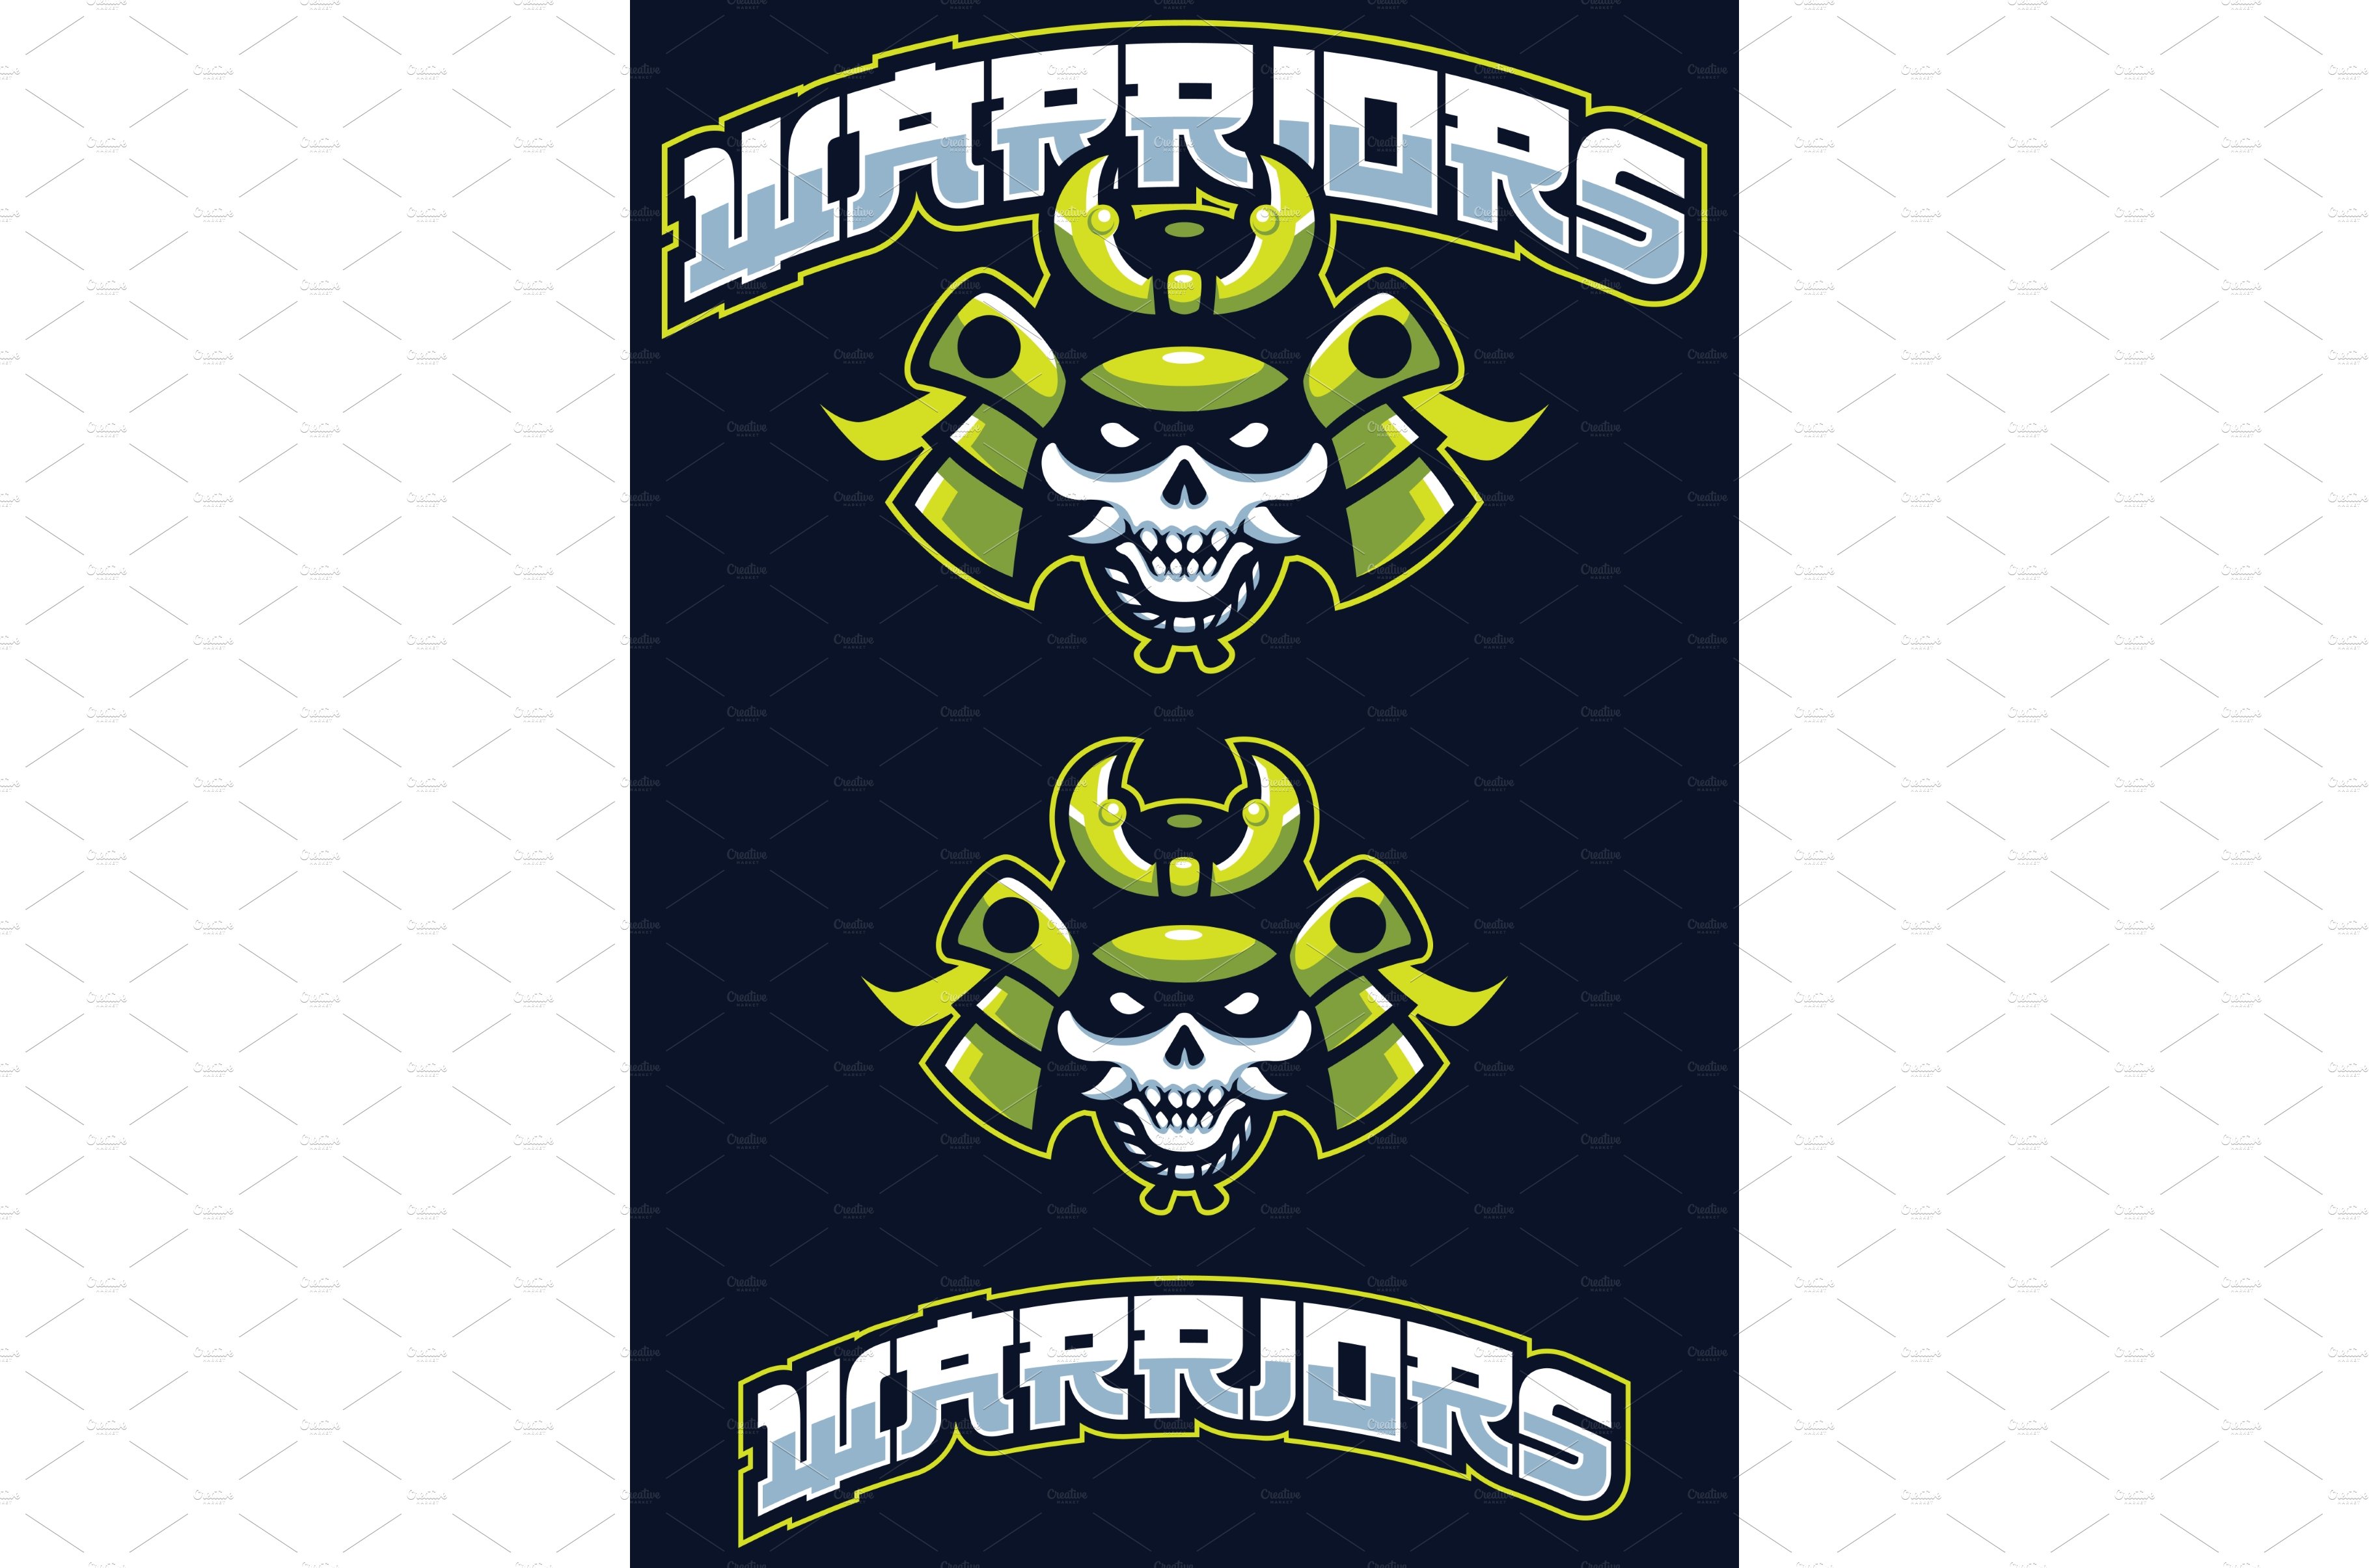 Warriors Team Mascot cover image.